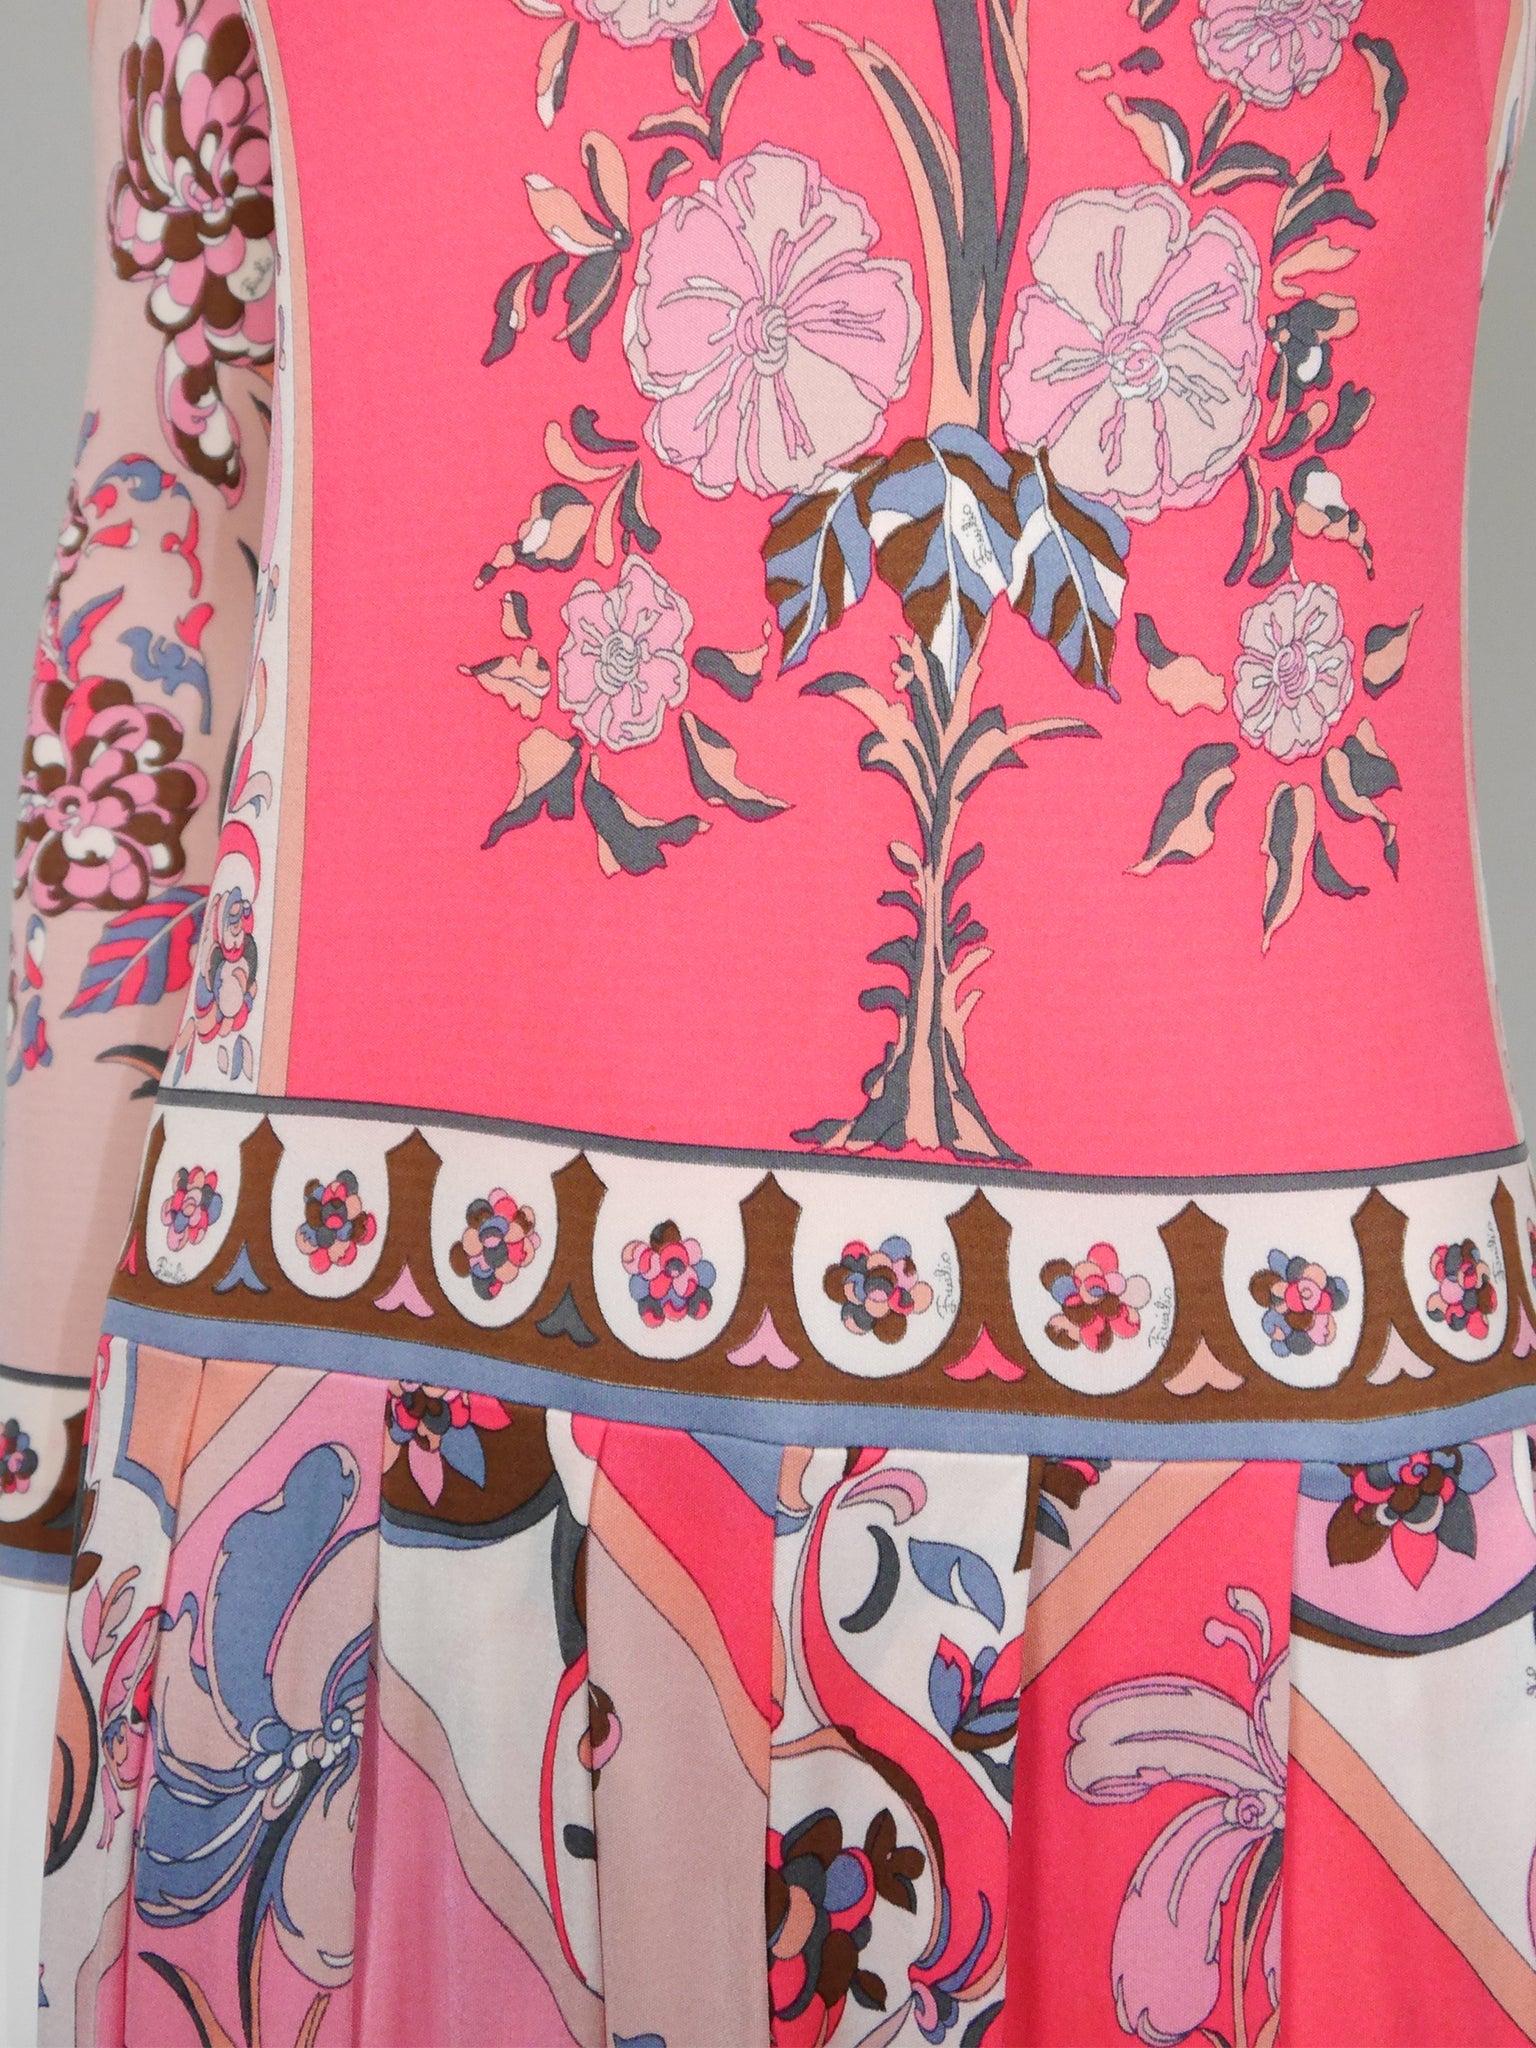 EMILIO PUCCI 1960s Vintage Signature Print Silk Jersey Dress Size XS